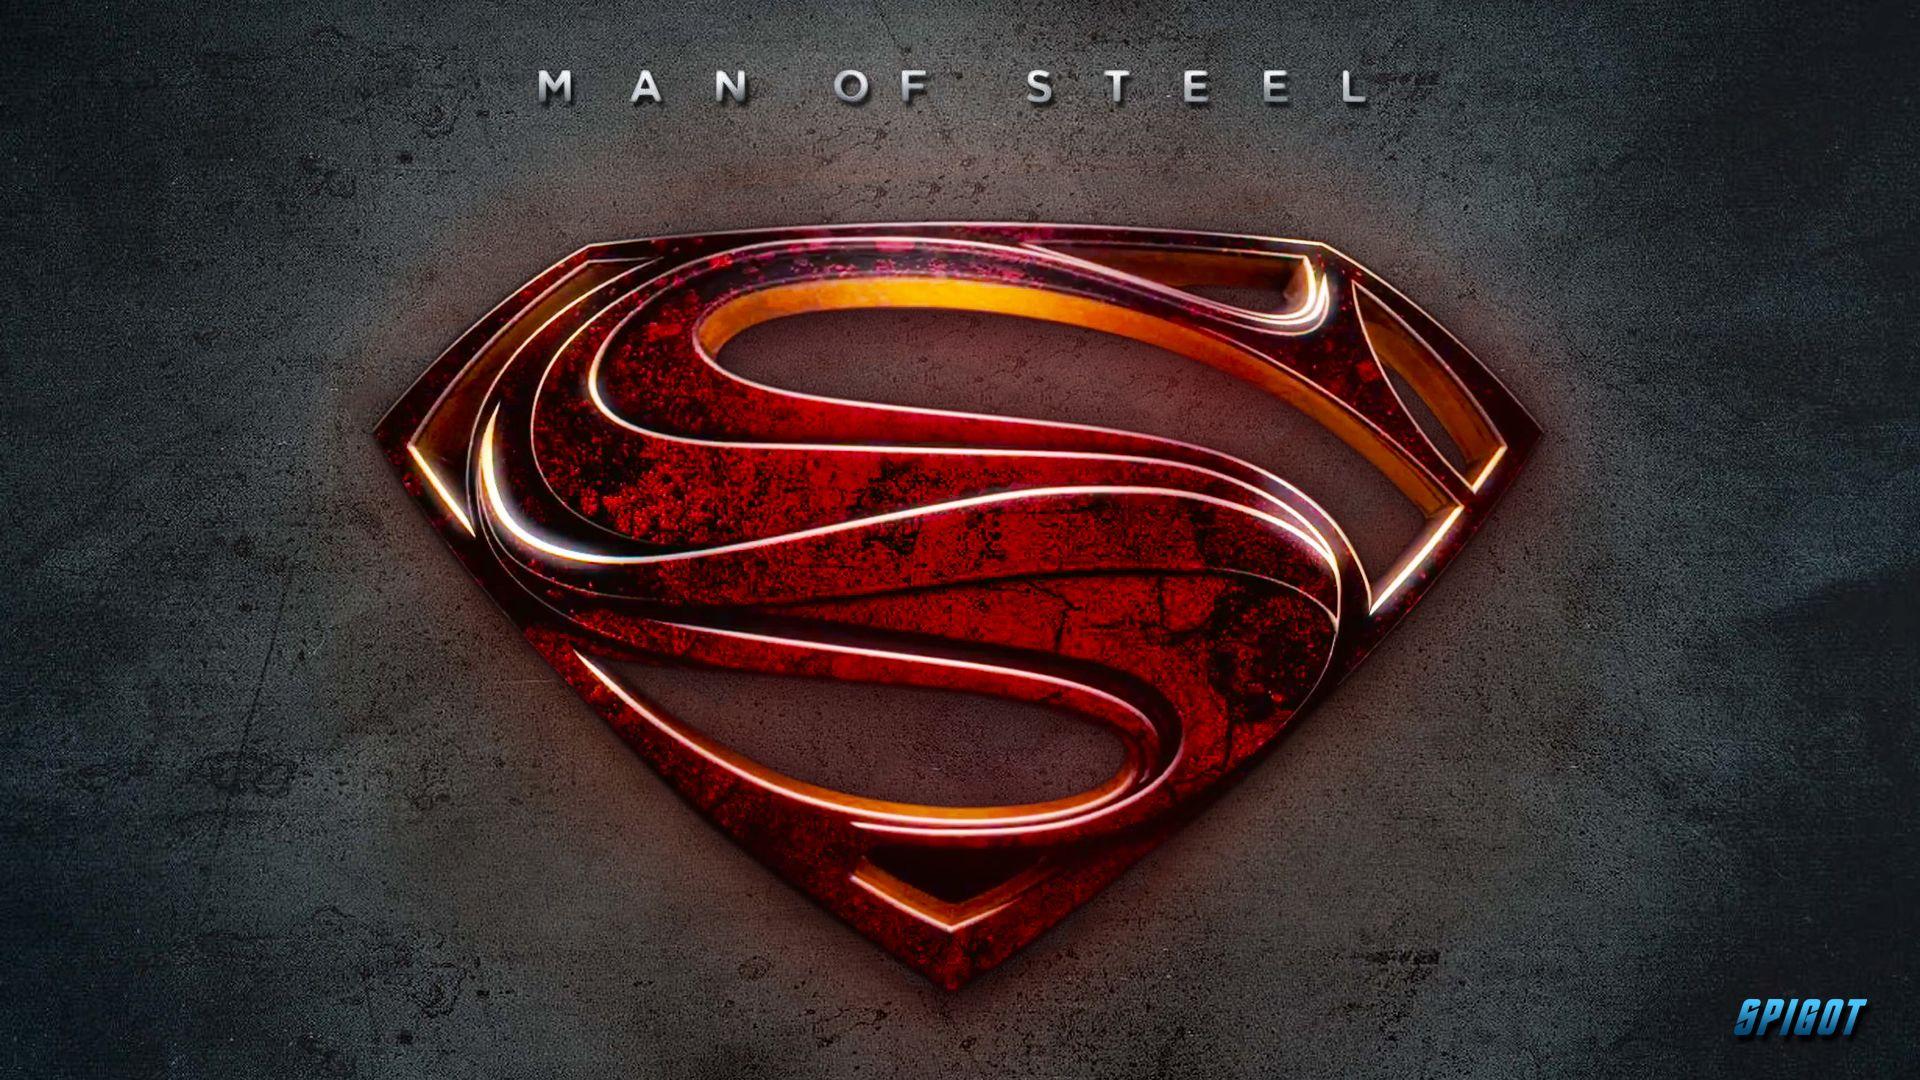 Man of Steel Title Logo - Man of Steel Logo Wallpaper - WallpaperSafari